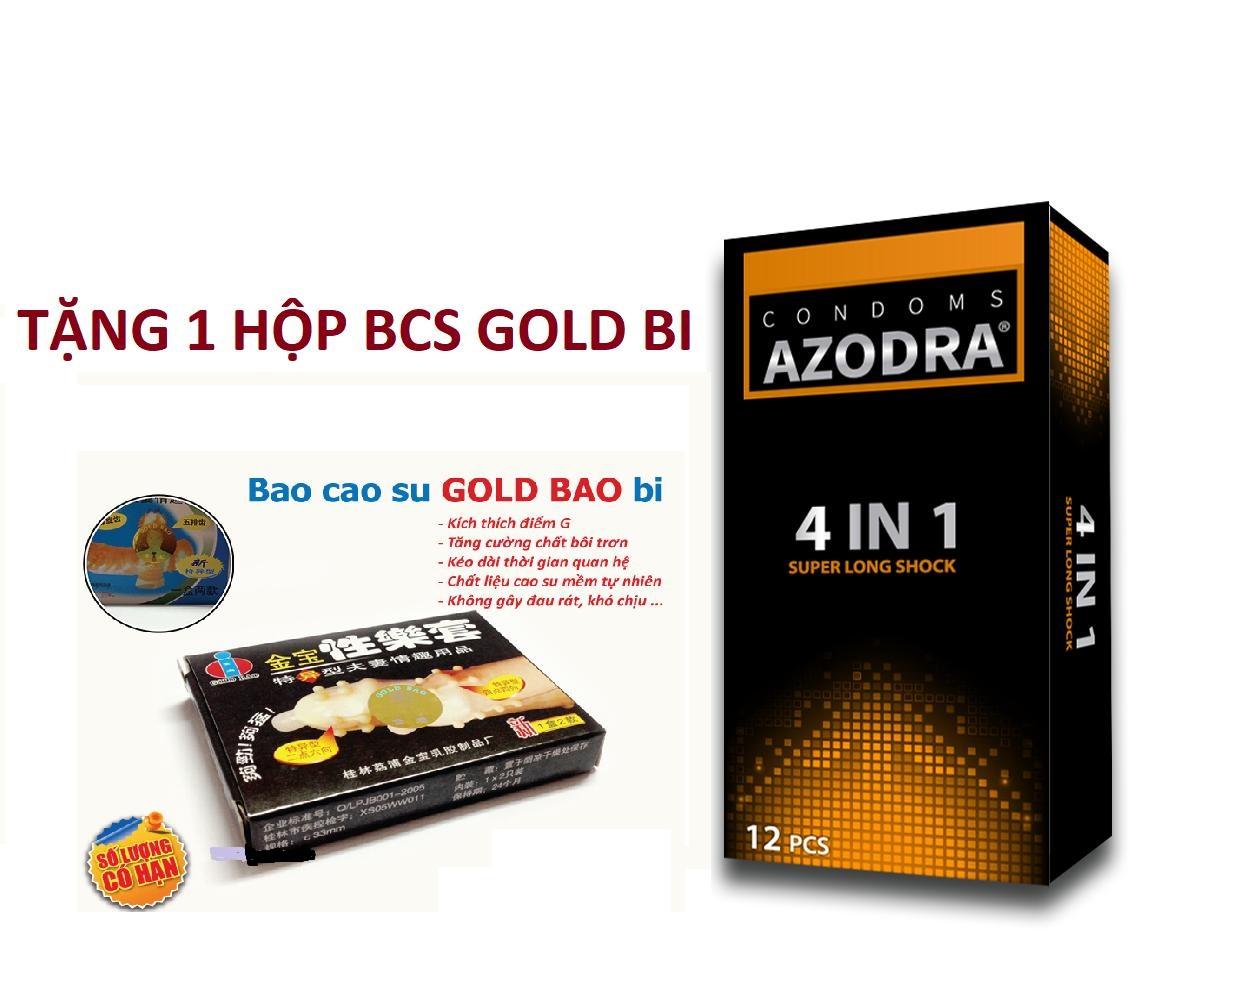 Combo 1 hộp bao cao su gân gai ,siêu mỏng Azodra 12c tặng 1 hộp bcs Gold bi gai lớn 2c